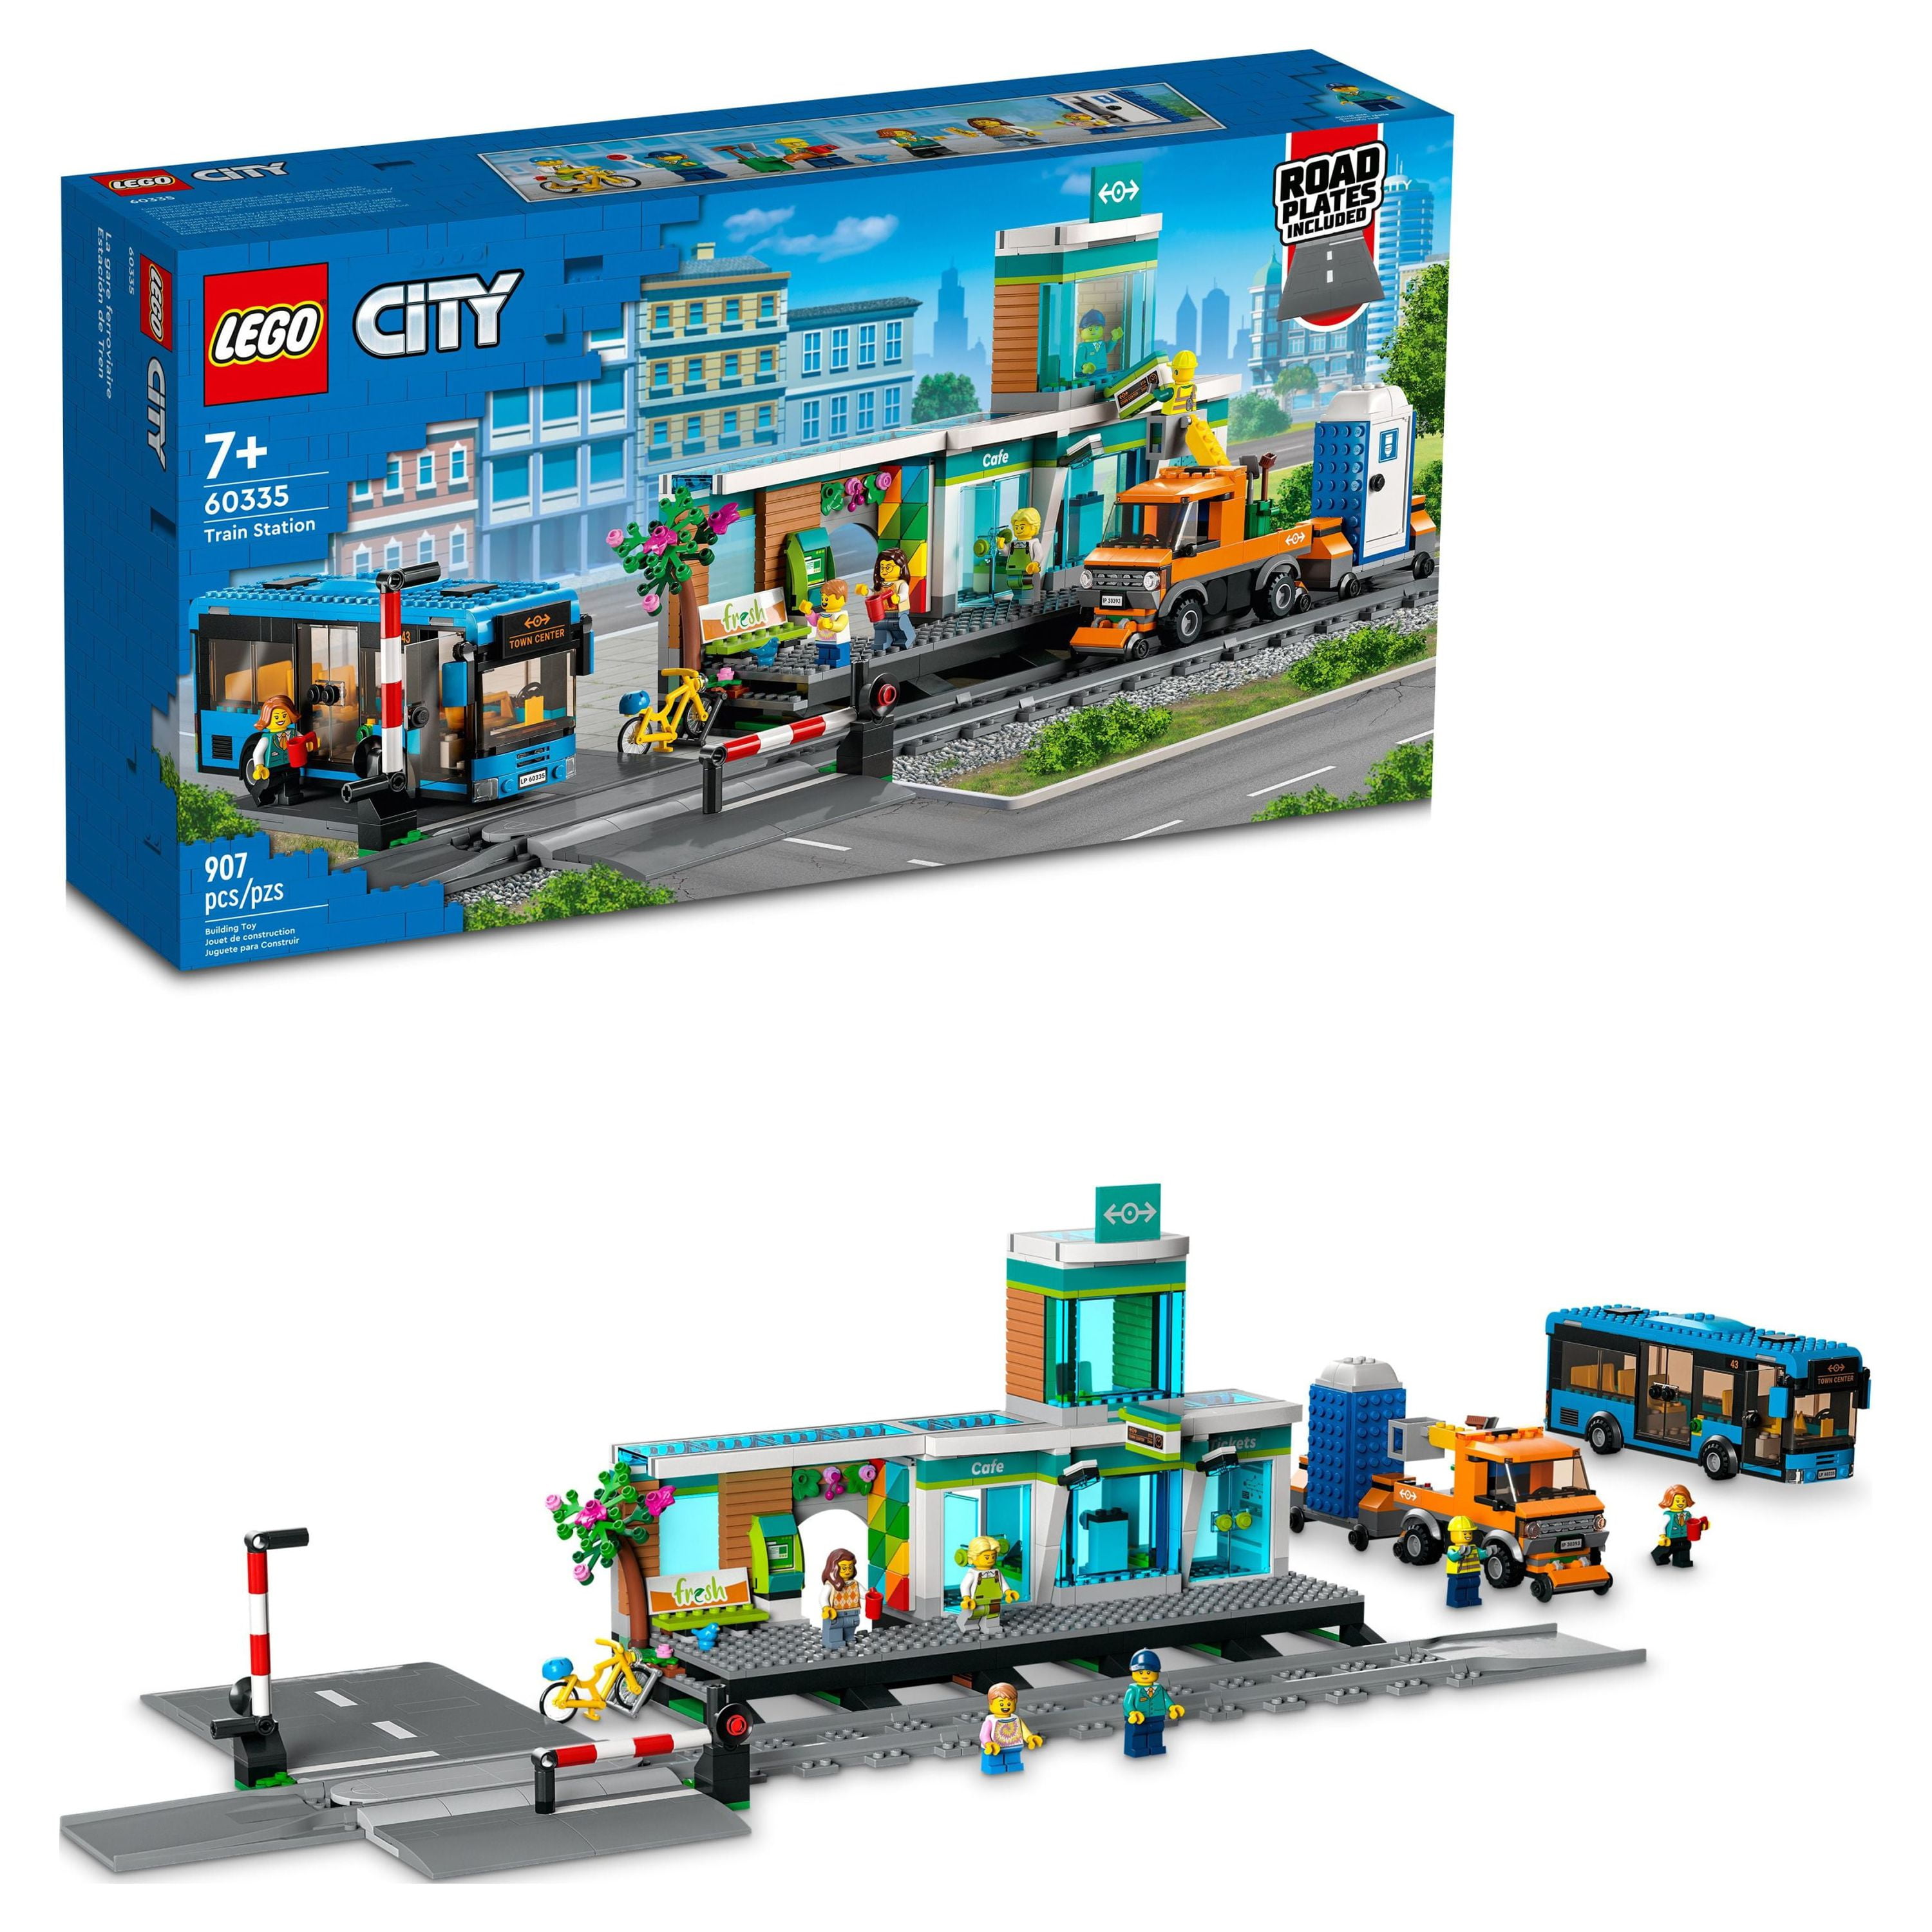  YEABRICKS LED Light for Lego-60337 City Express Passenger Train  Building Blocks Model (Lego Set NOT Included) : Toys & Games